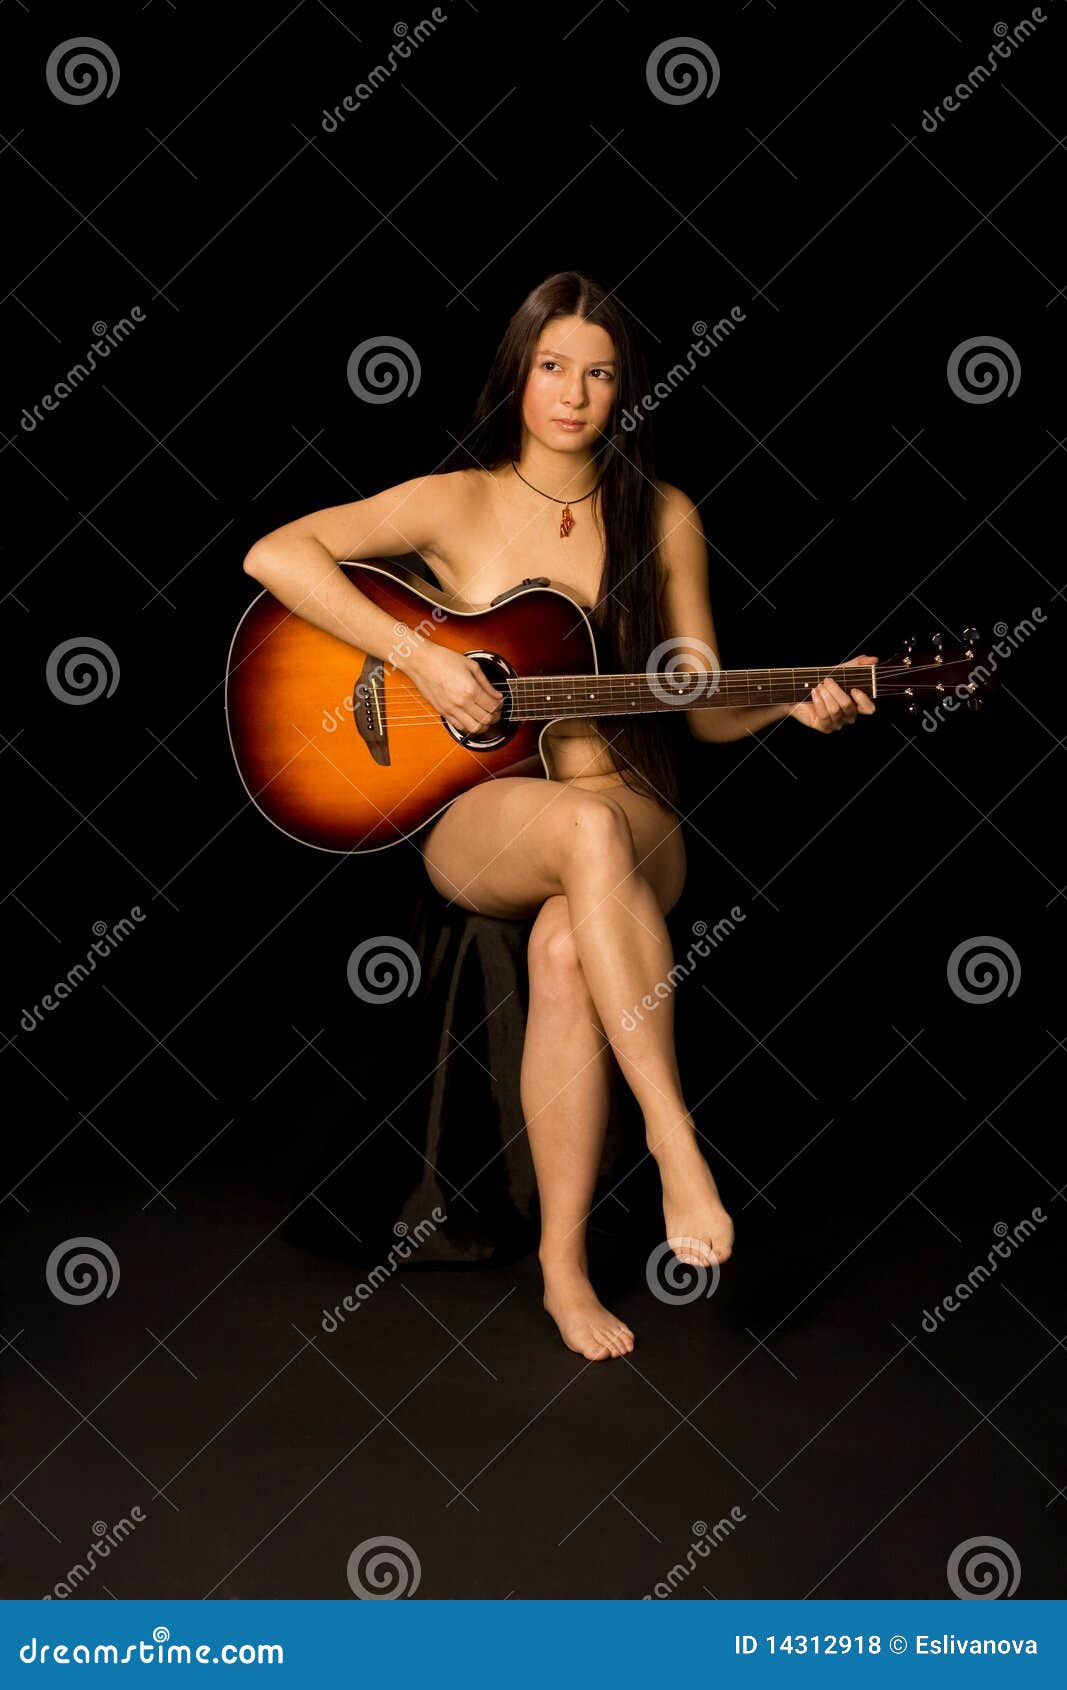 bill wiest add photo nude girl with guitar